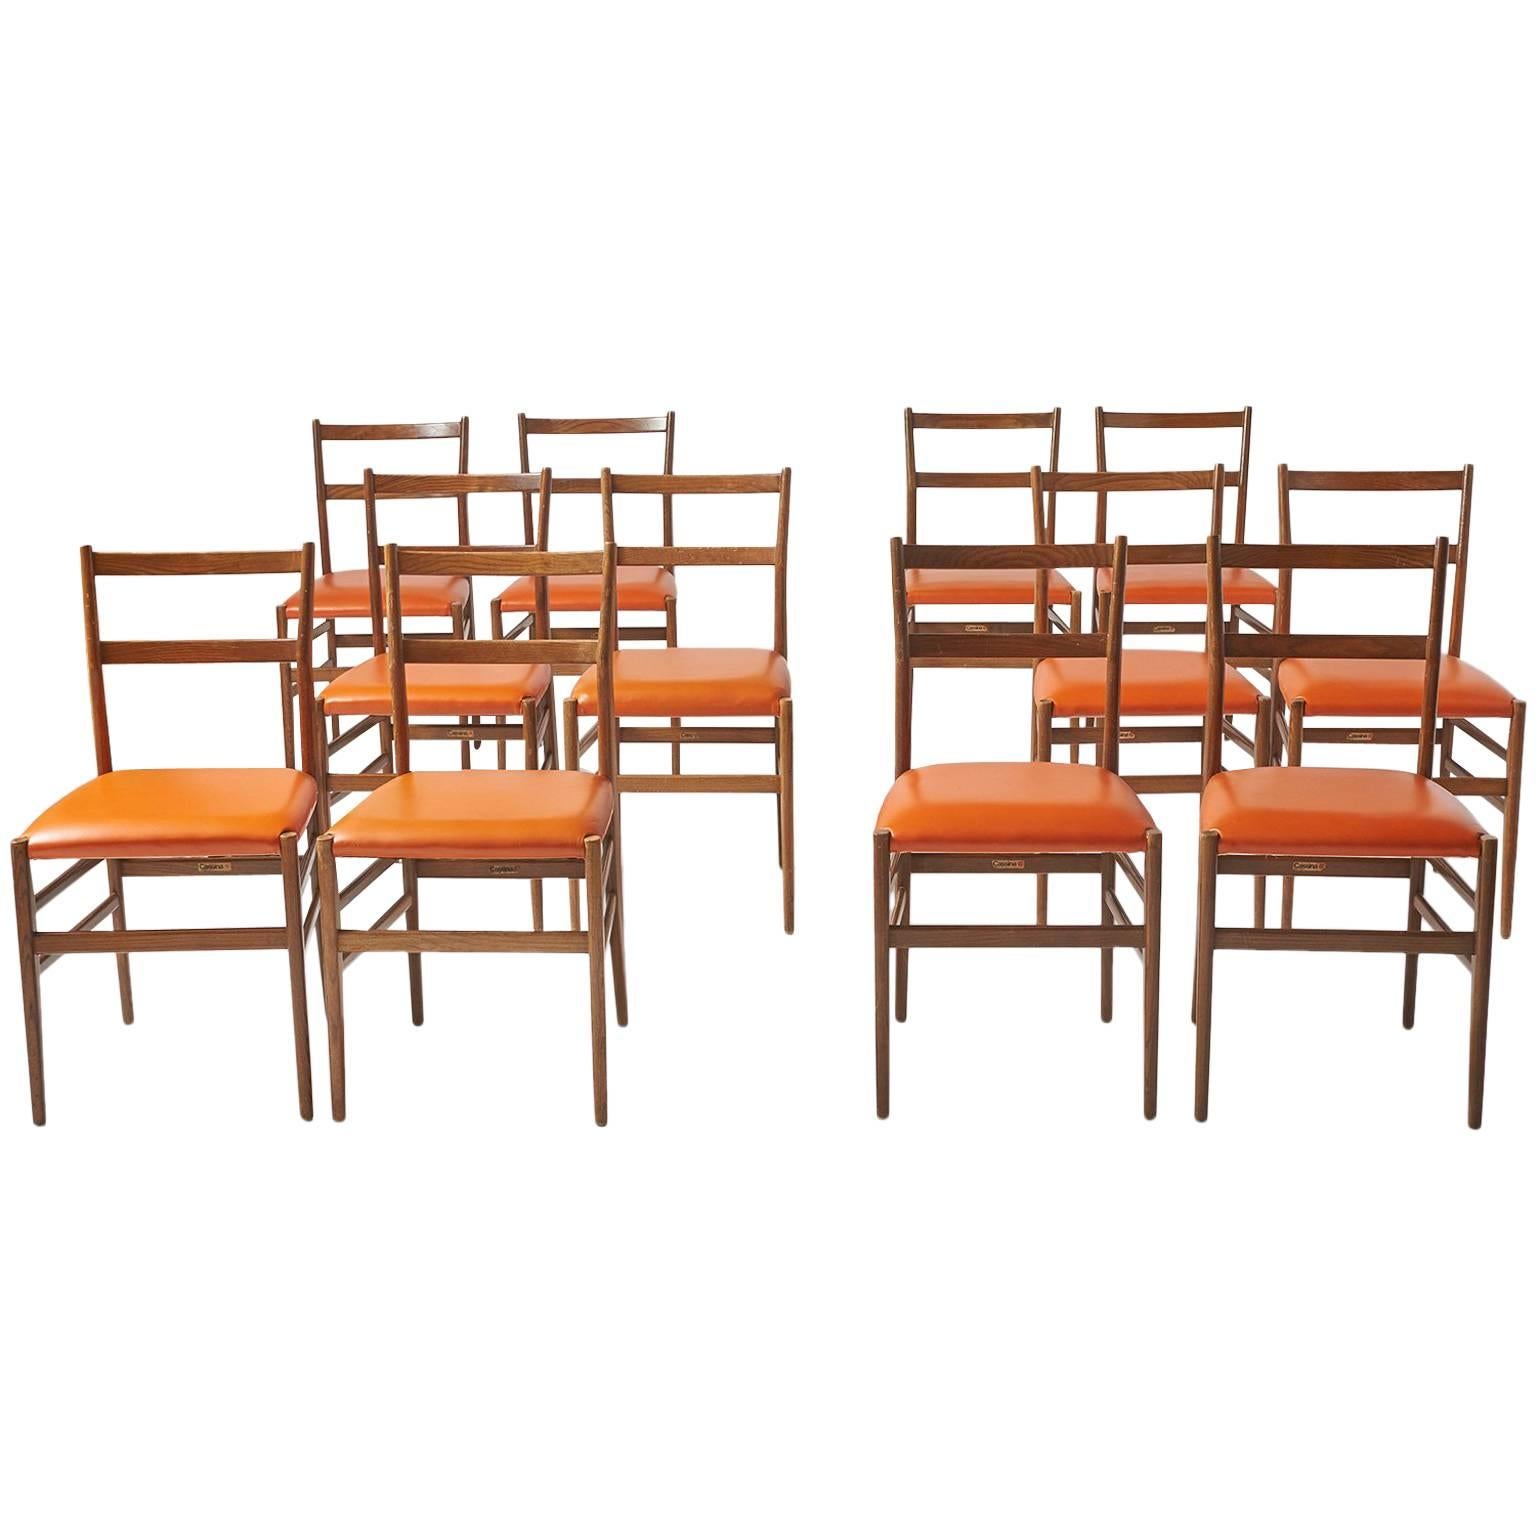 Leggera Chairs by Gio Ponti for Cassina